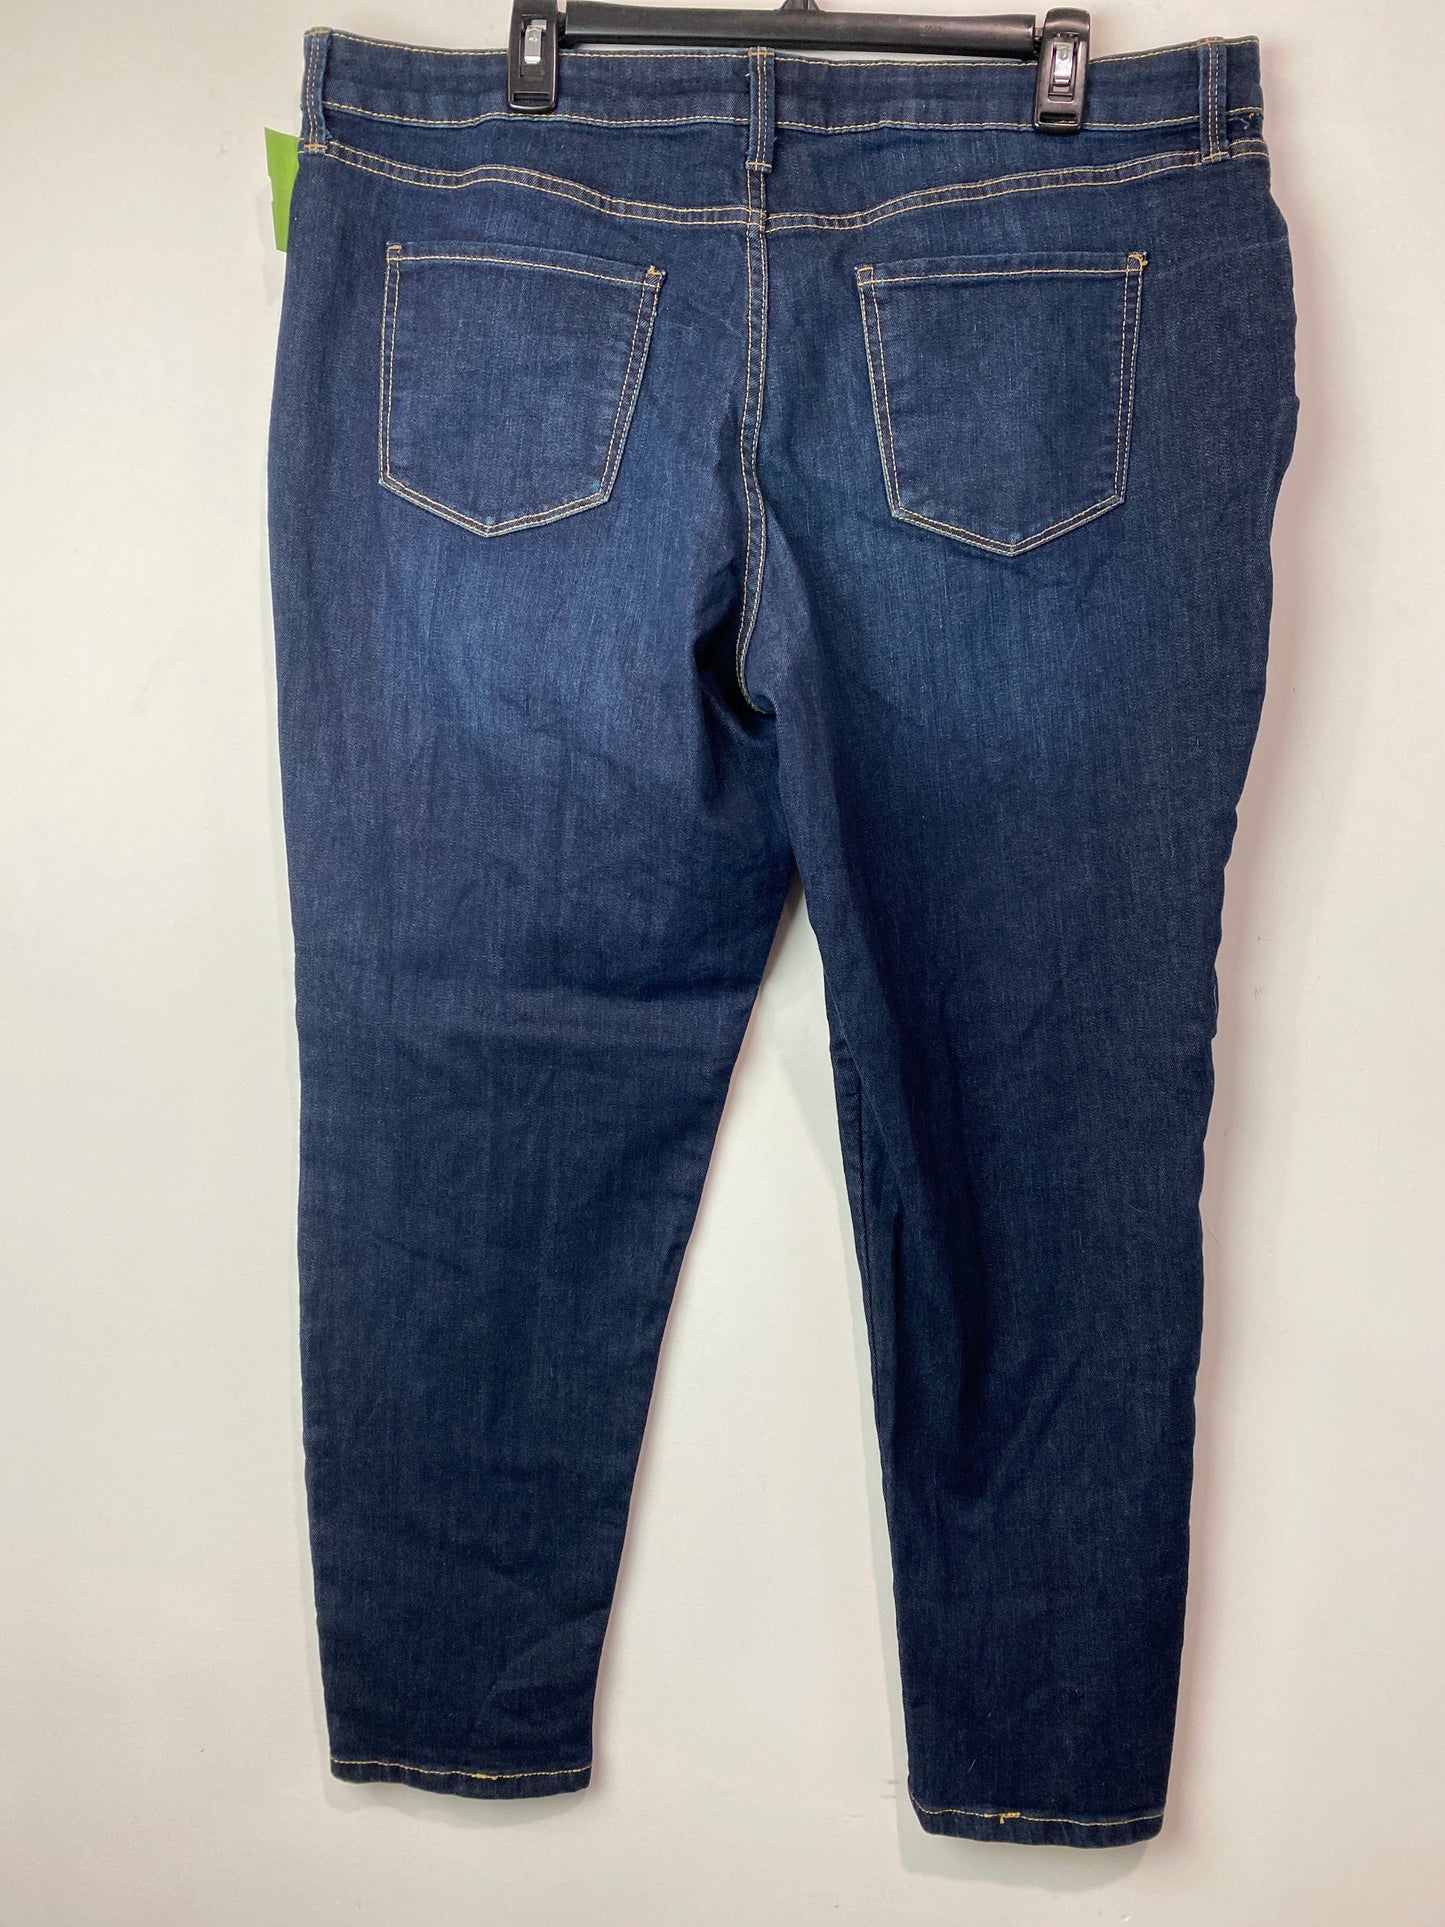 Jeans Skinny By St Johns Bay  Size: 16